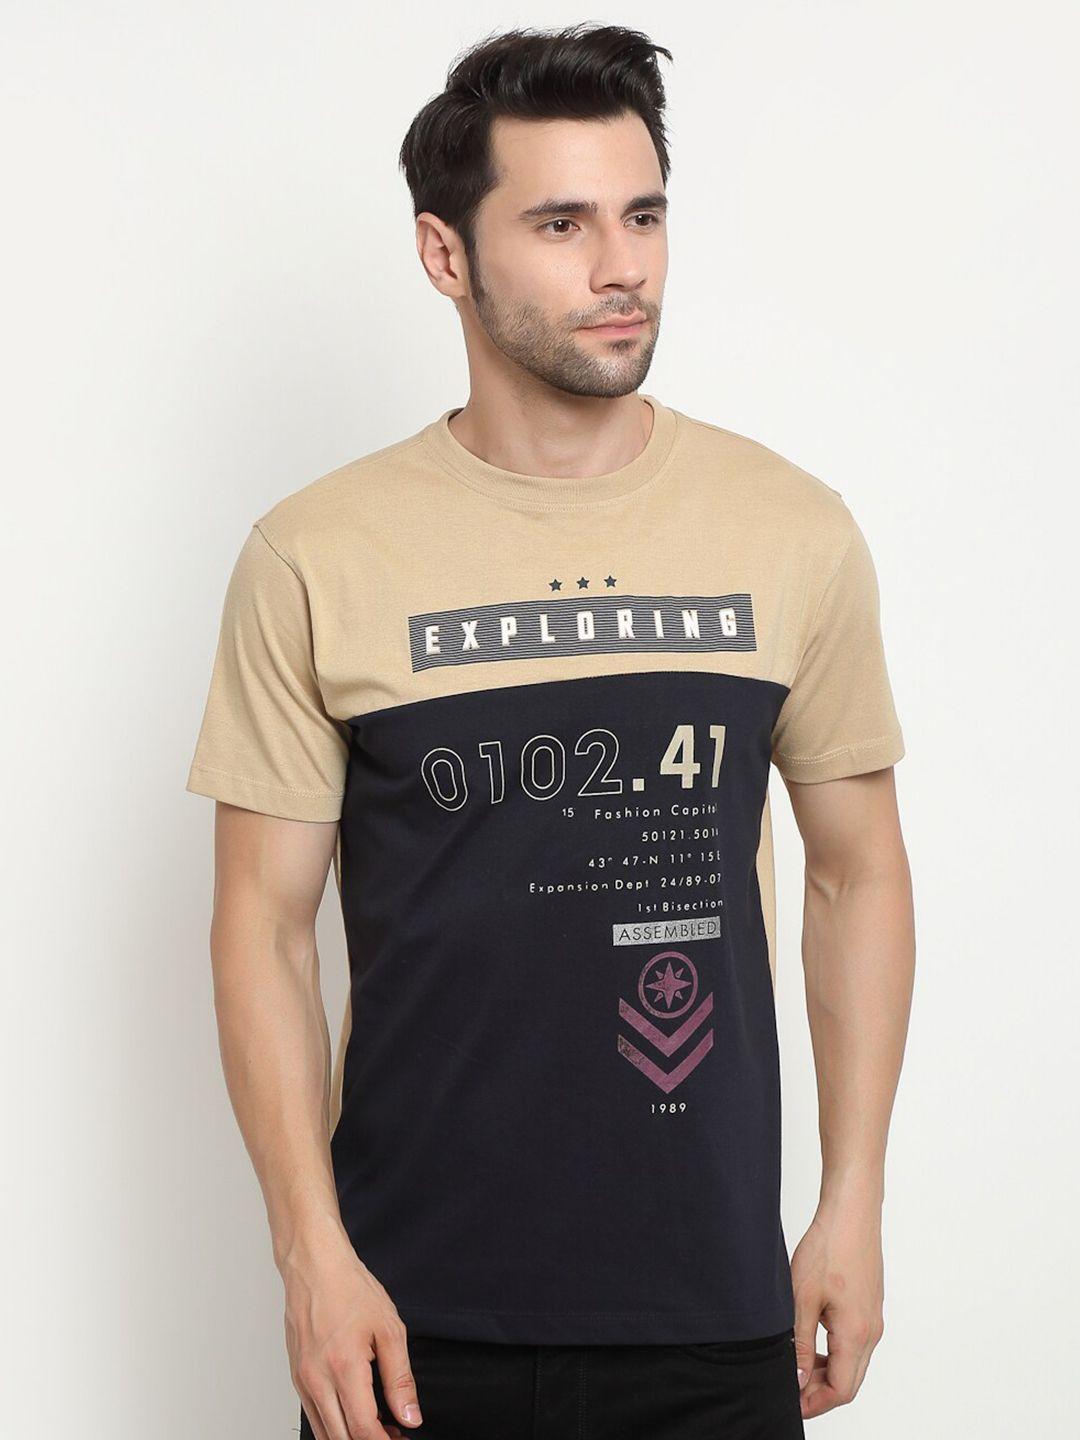 cantabil men brown & black colourblocked cotton t-shirt